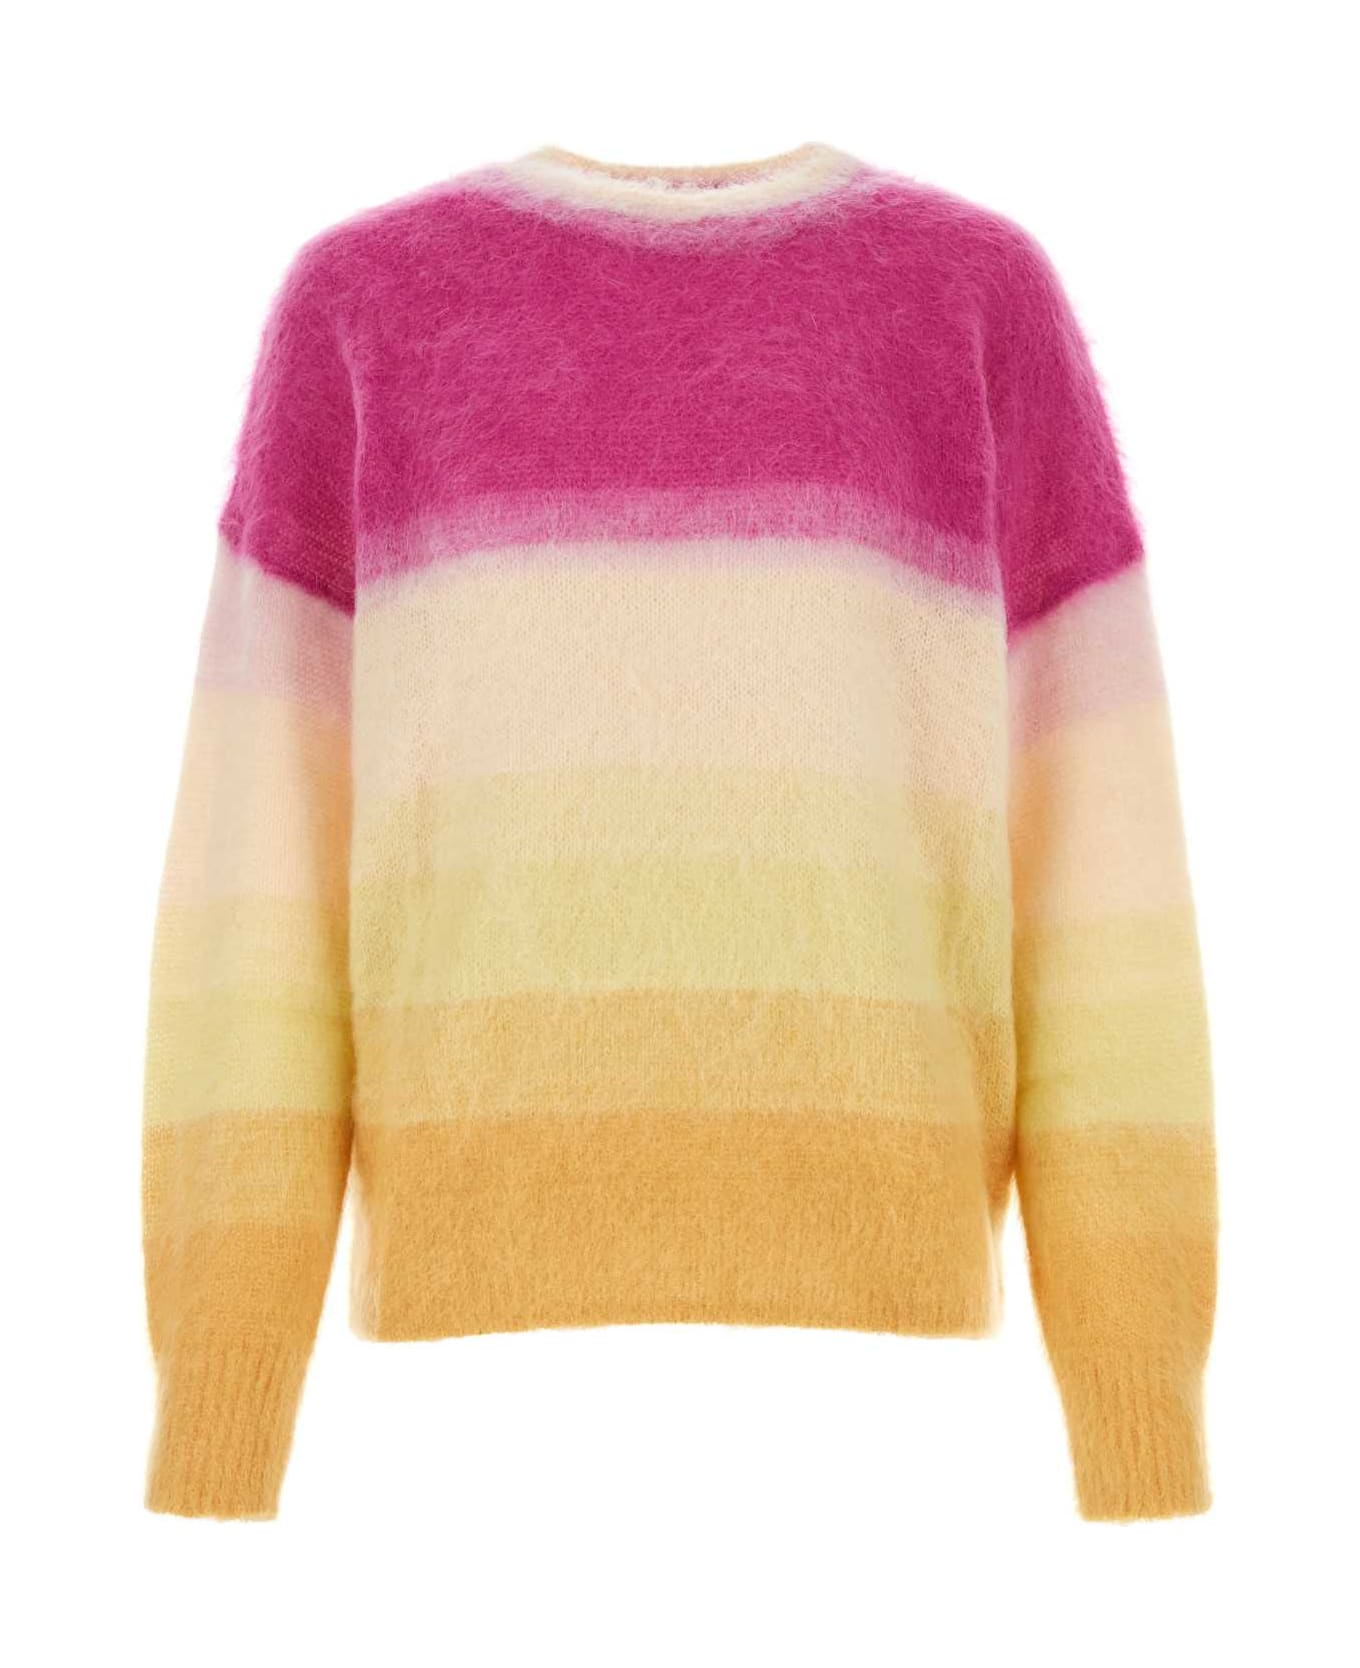 Marant Étoile Multicolor Mohair Blend Oversize Drussell Sweater - FUSHIAYELLOW